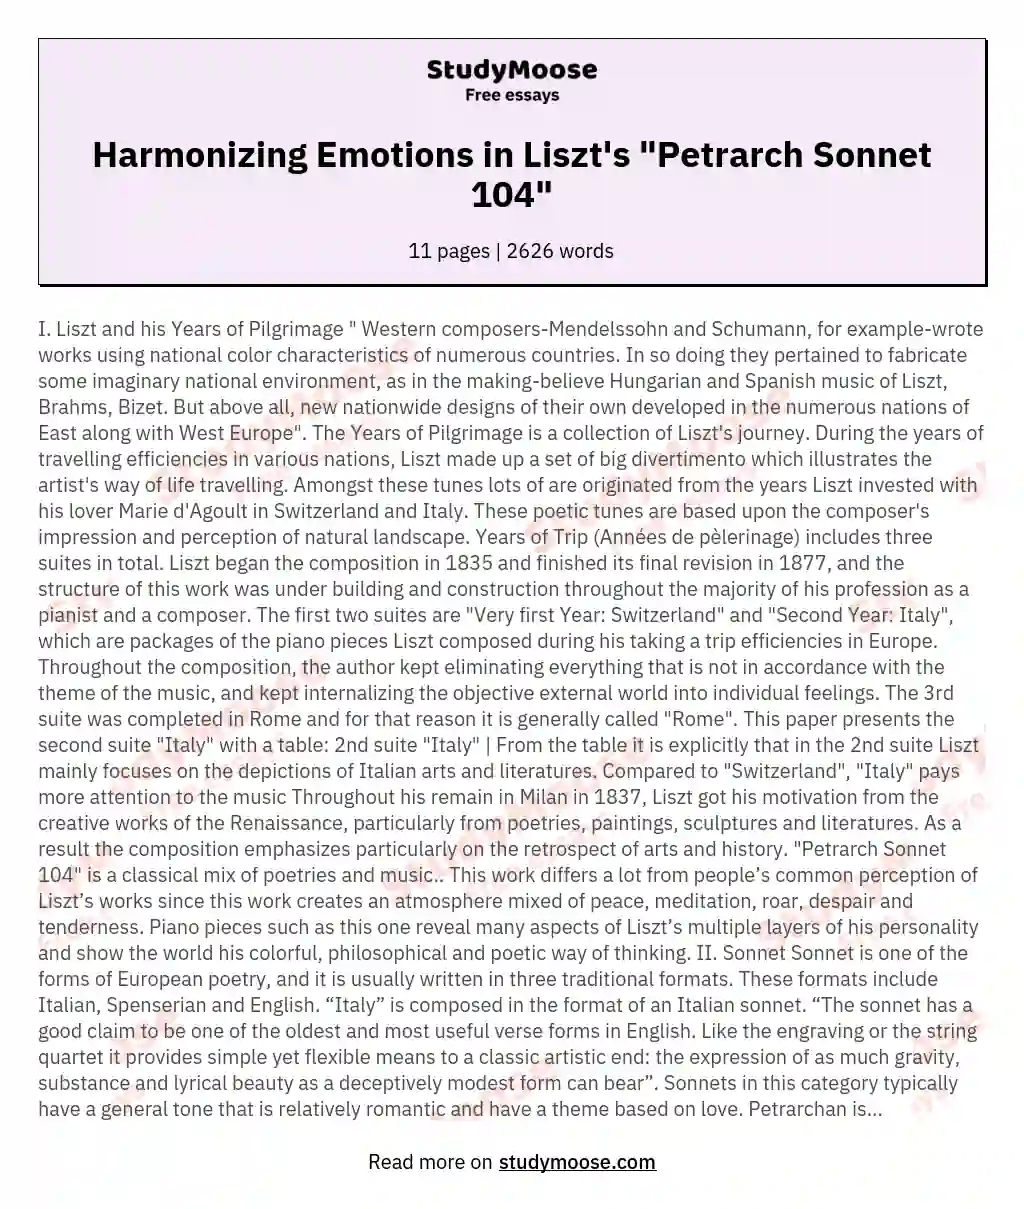 Harmonizing Emotions in Liszt's "Petrarch Sonnet 104" essay